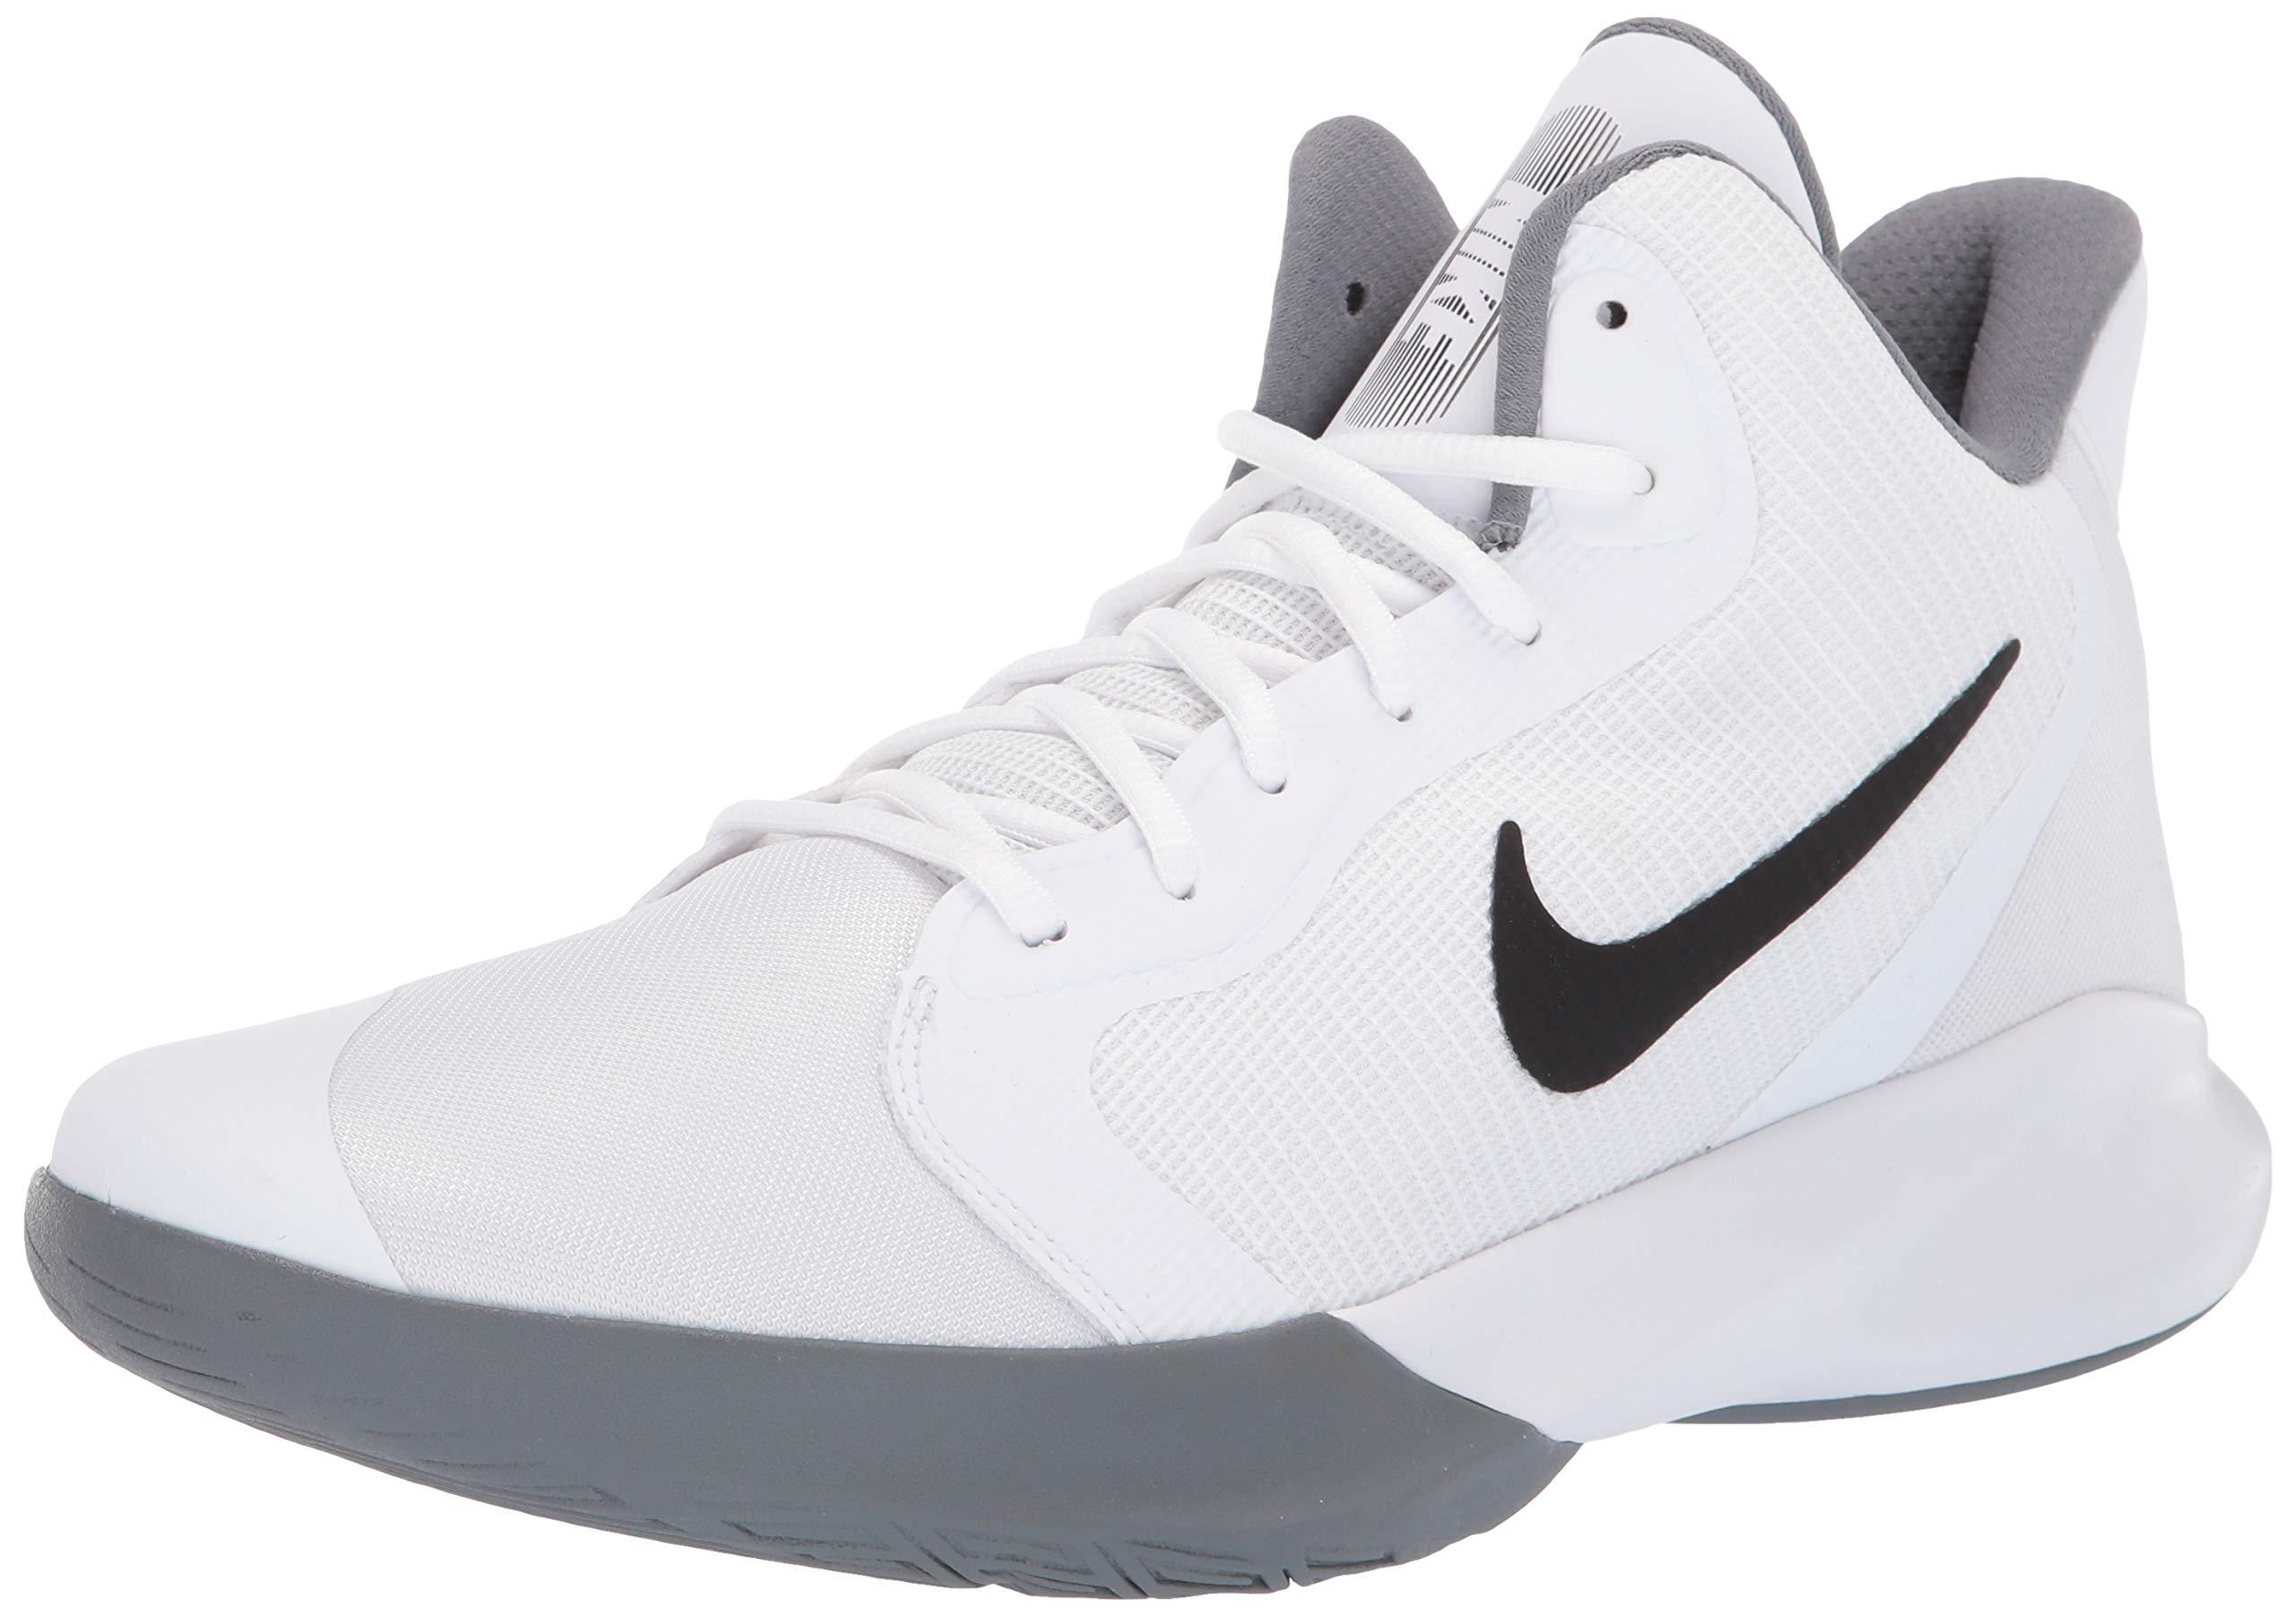 Nike Precision Iii Basketball Shoe in White/Black (White) - Save 33% | Lyst